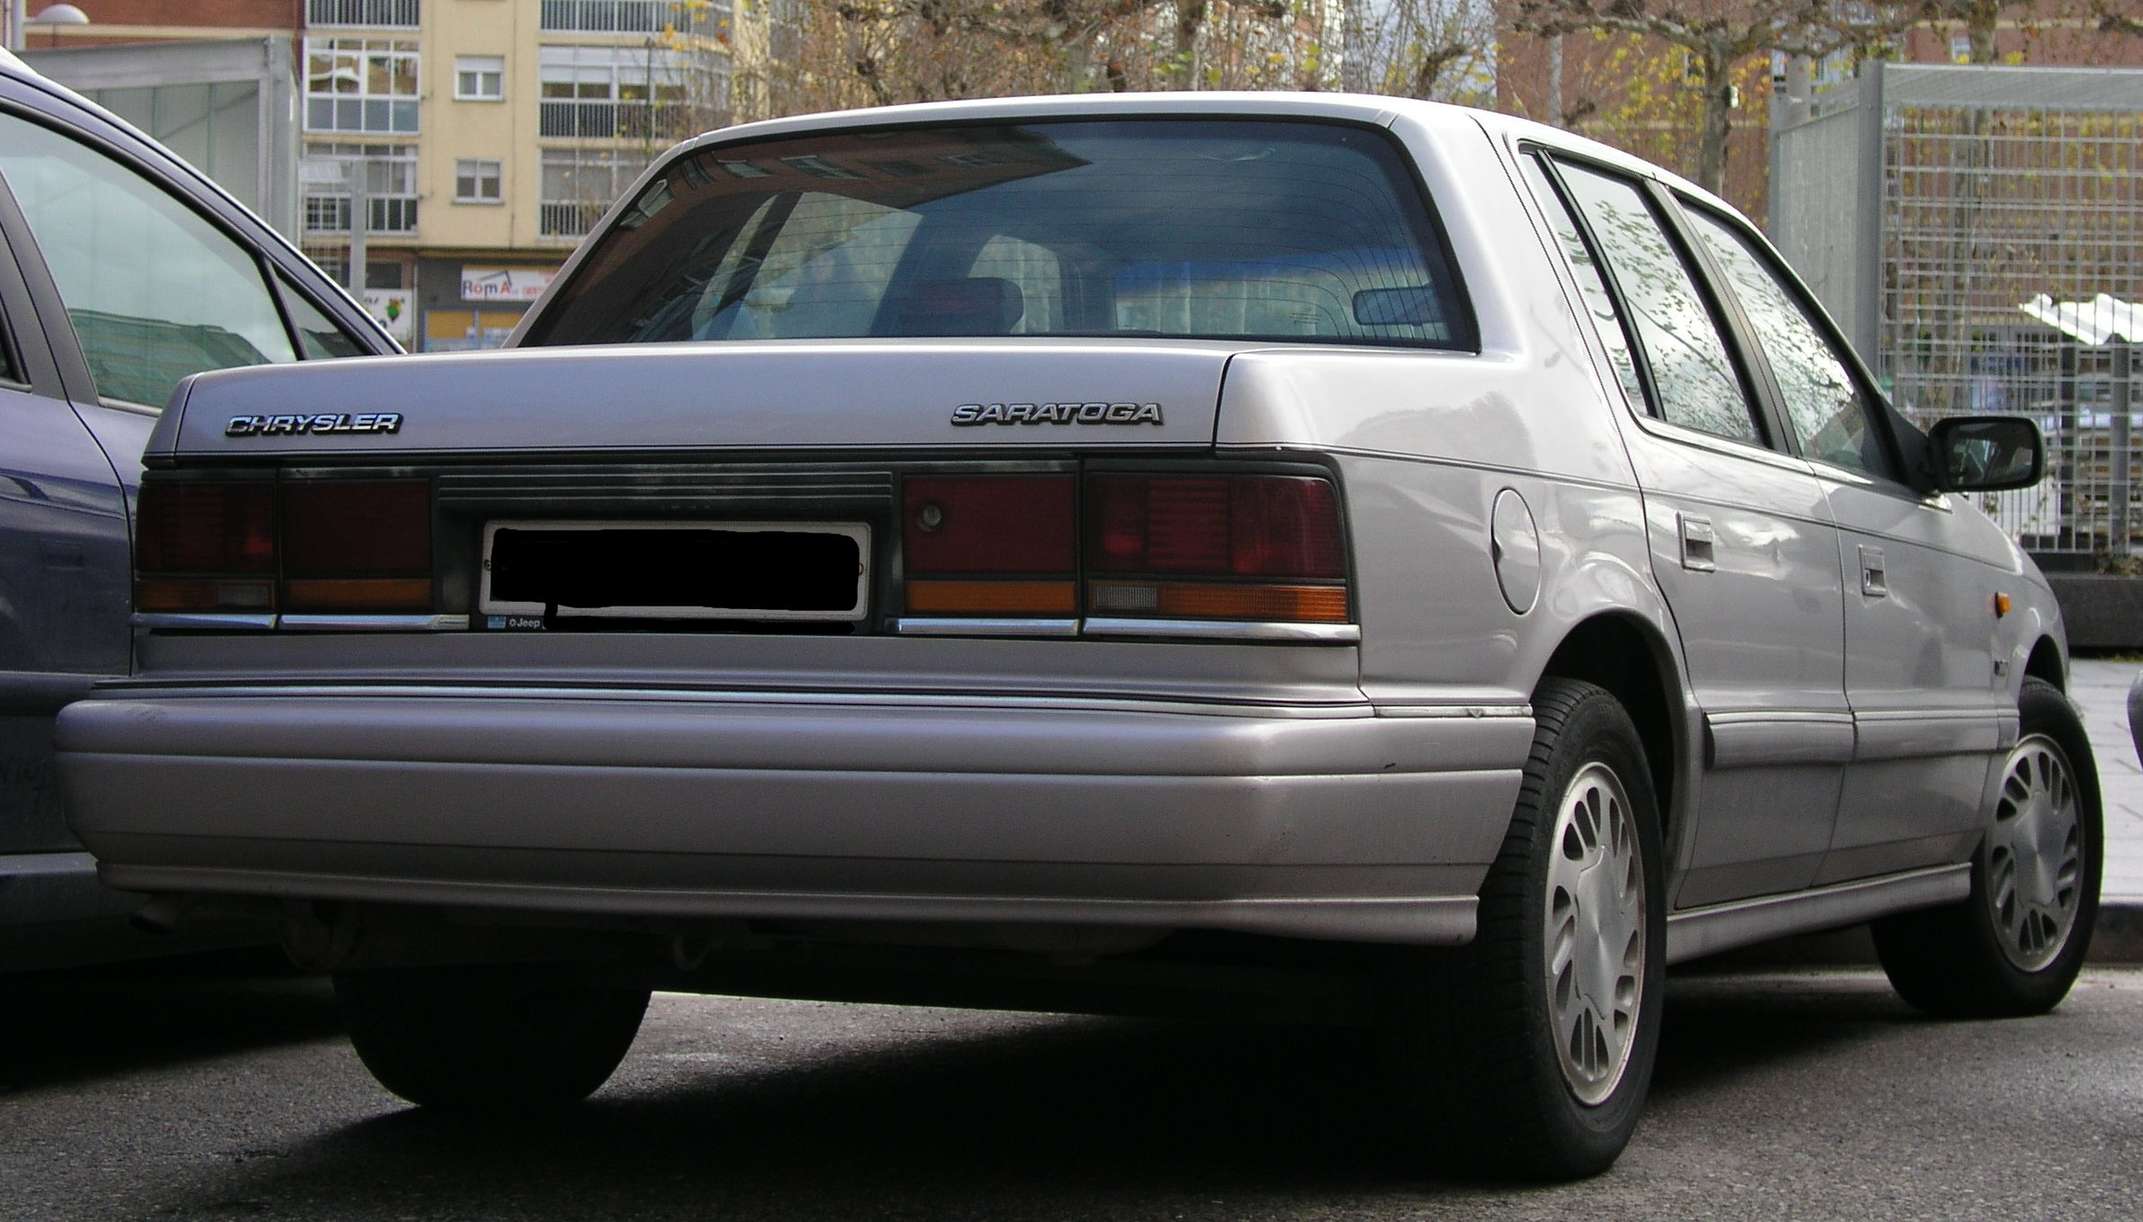 Chrysler Saratoga #8065592